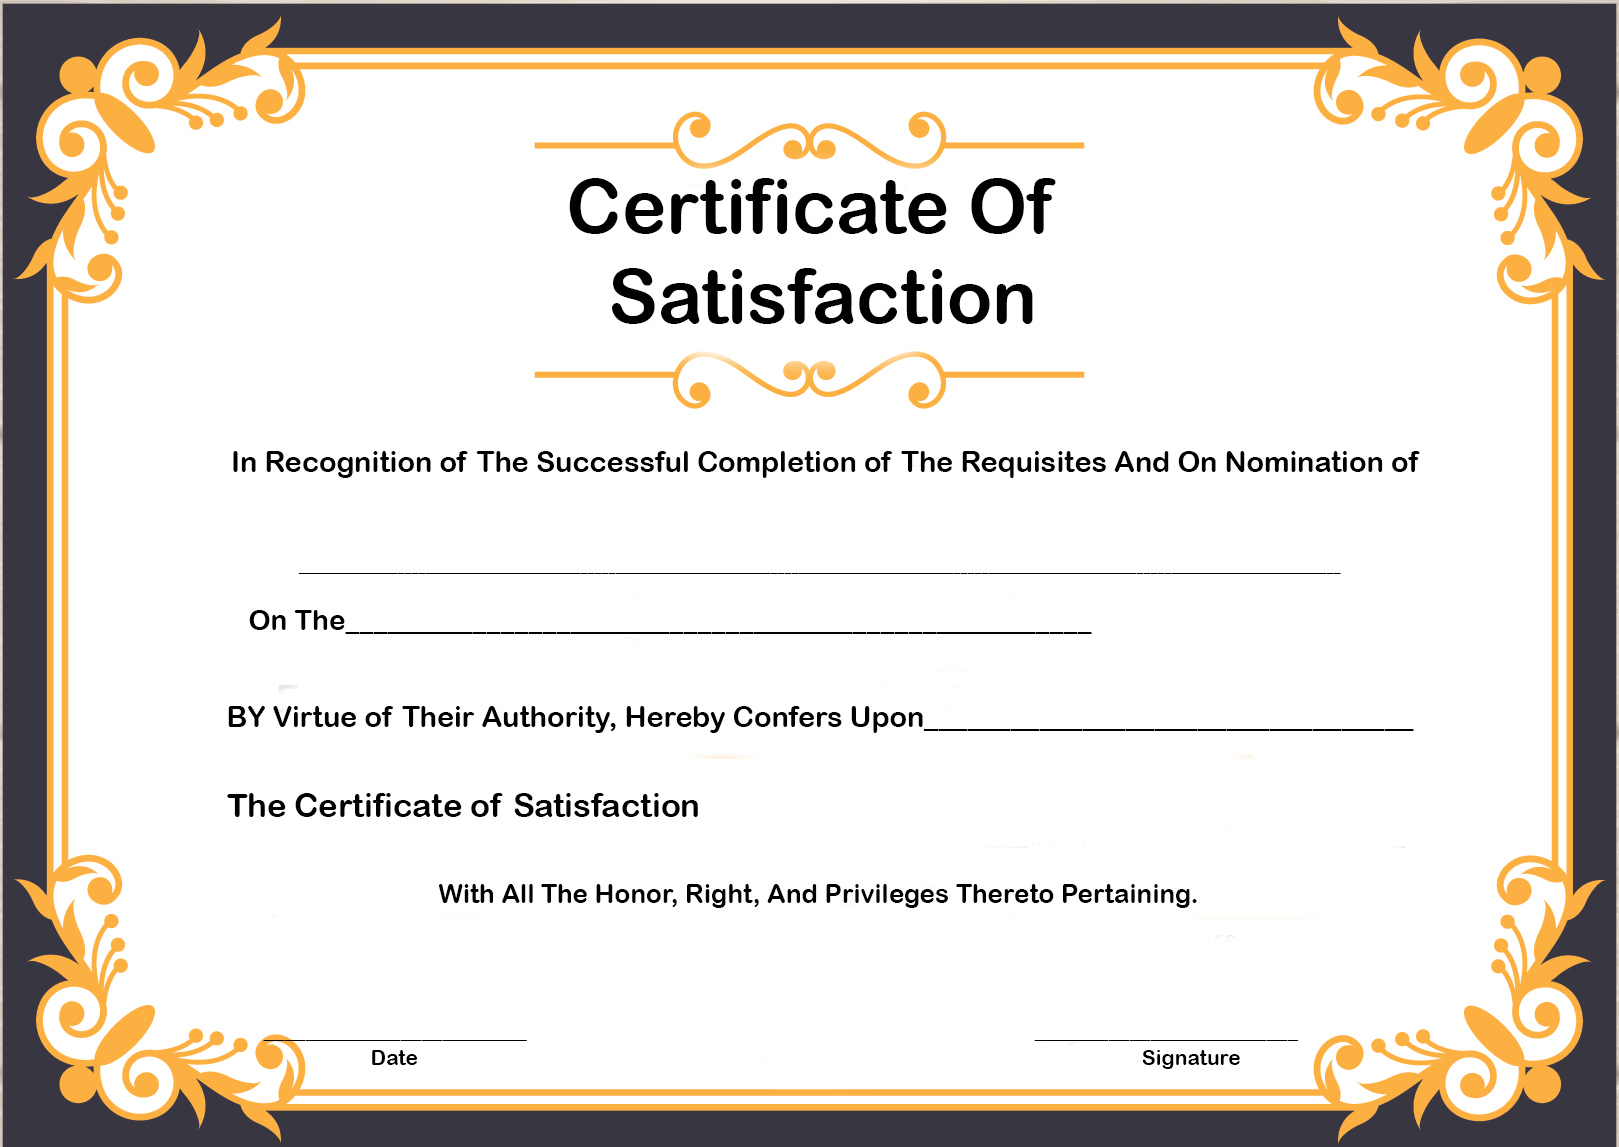 Certificate of Satisfaction Sample 